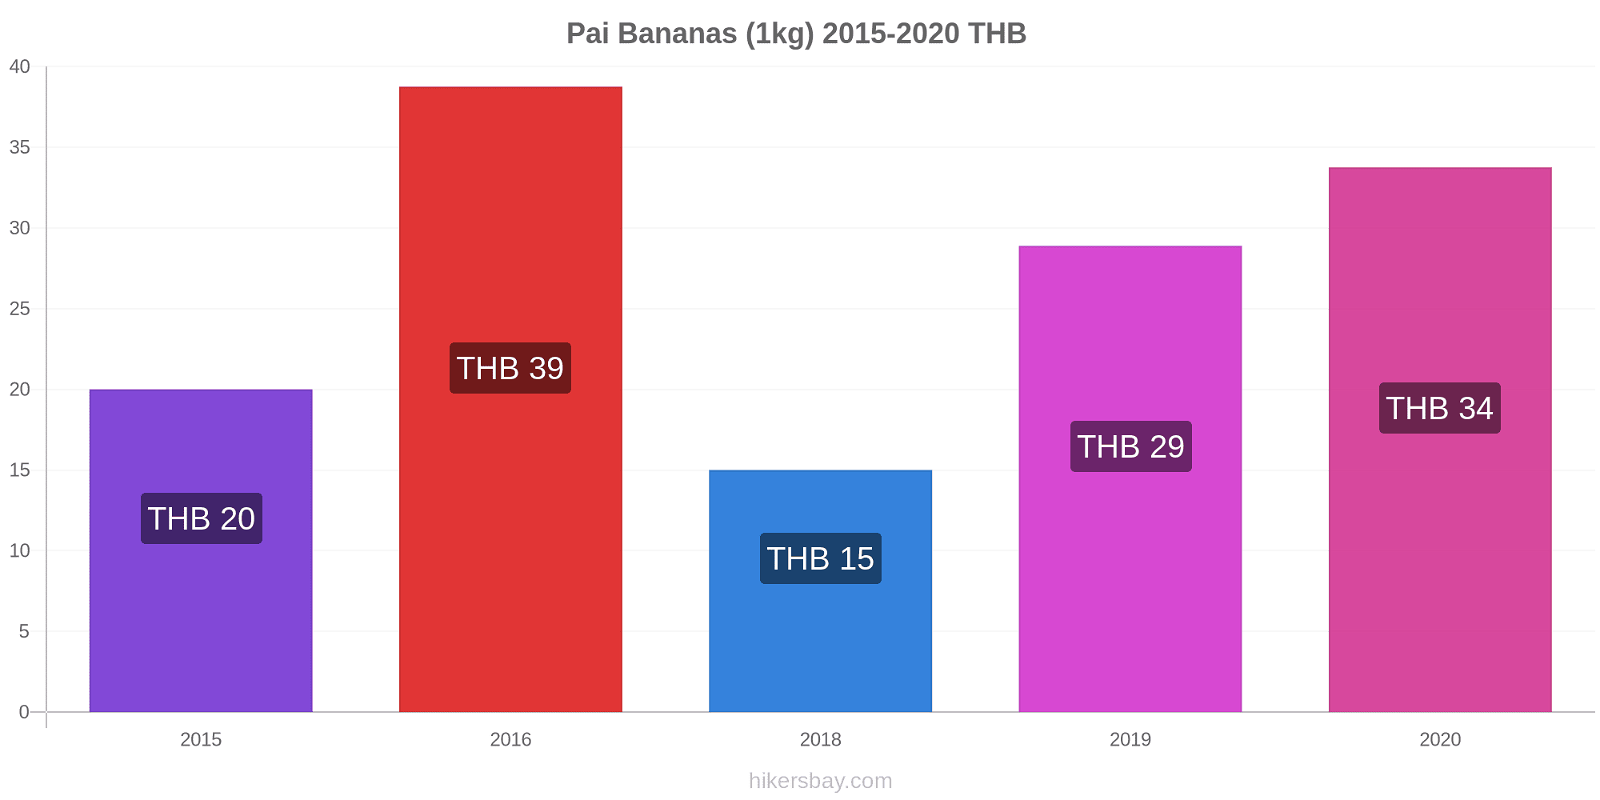 Pai price changes Bananas (1kg) hikersbay.com